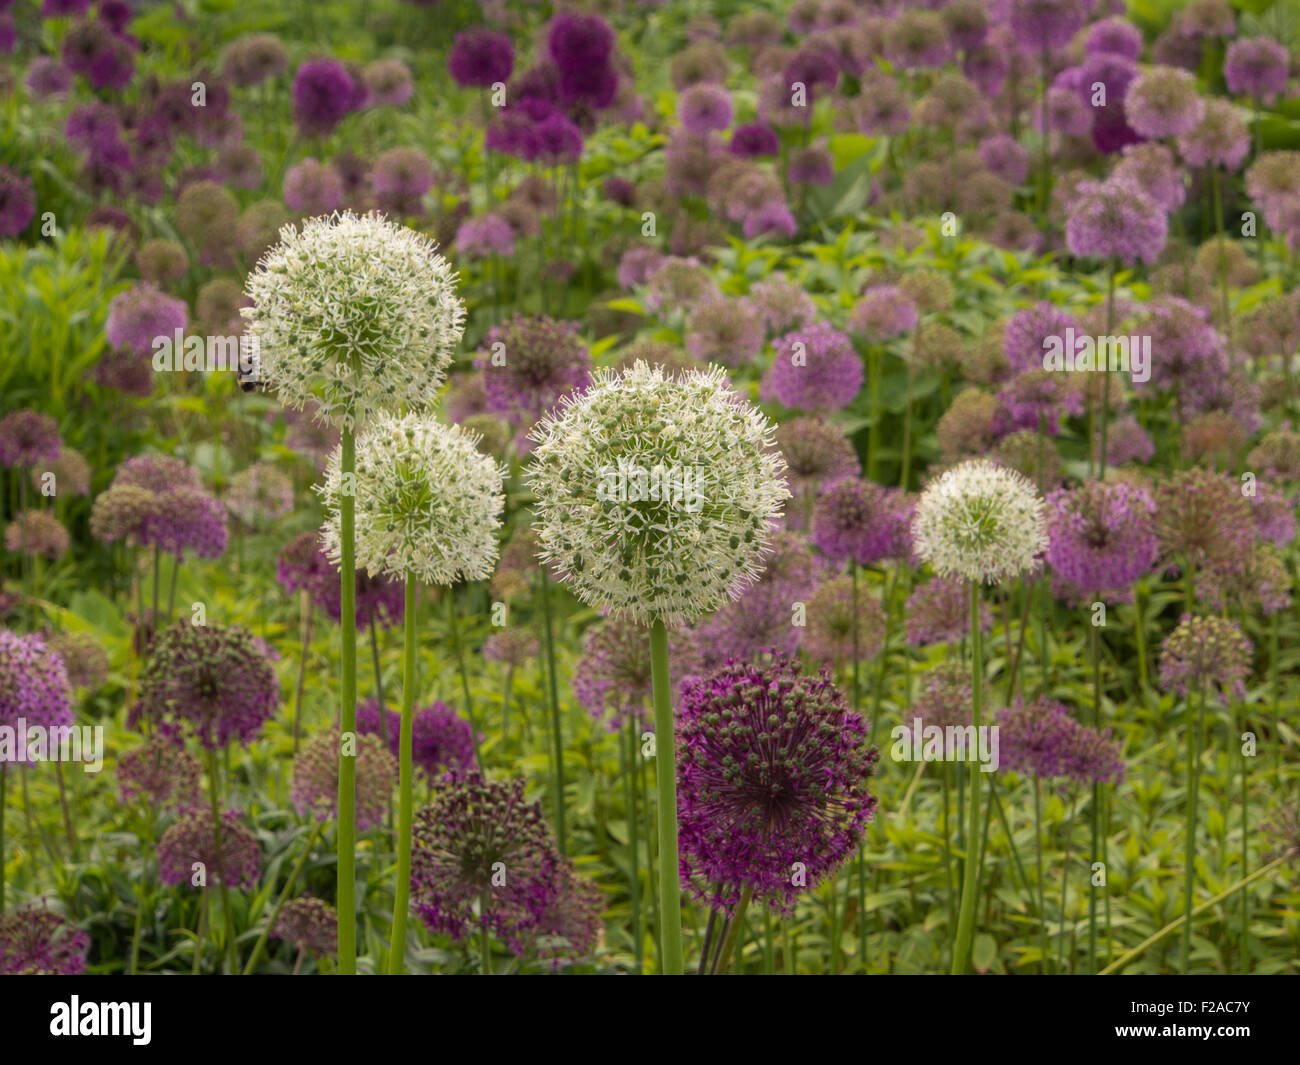 Allium plants flowering Stock Photo